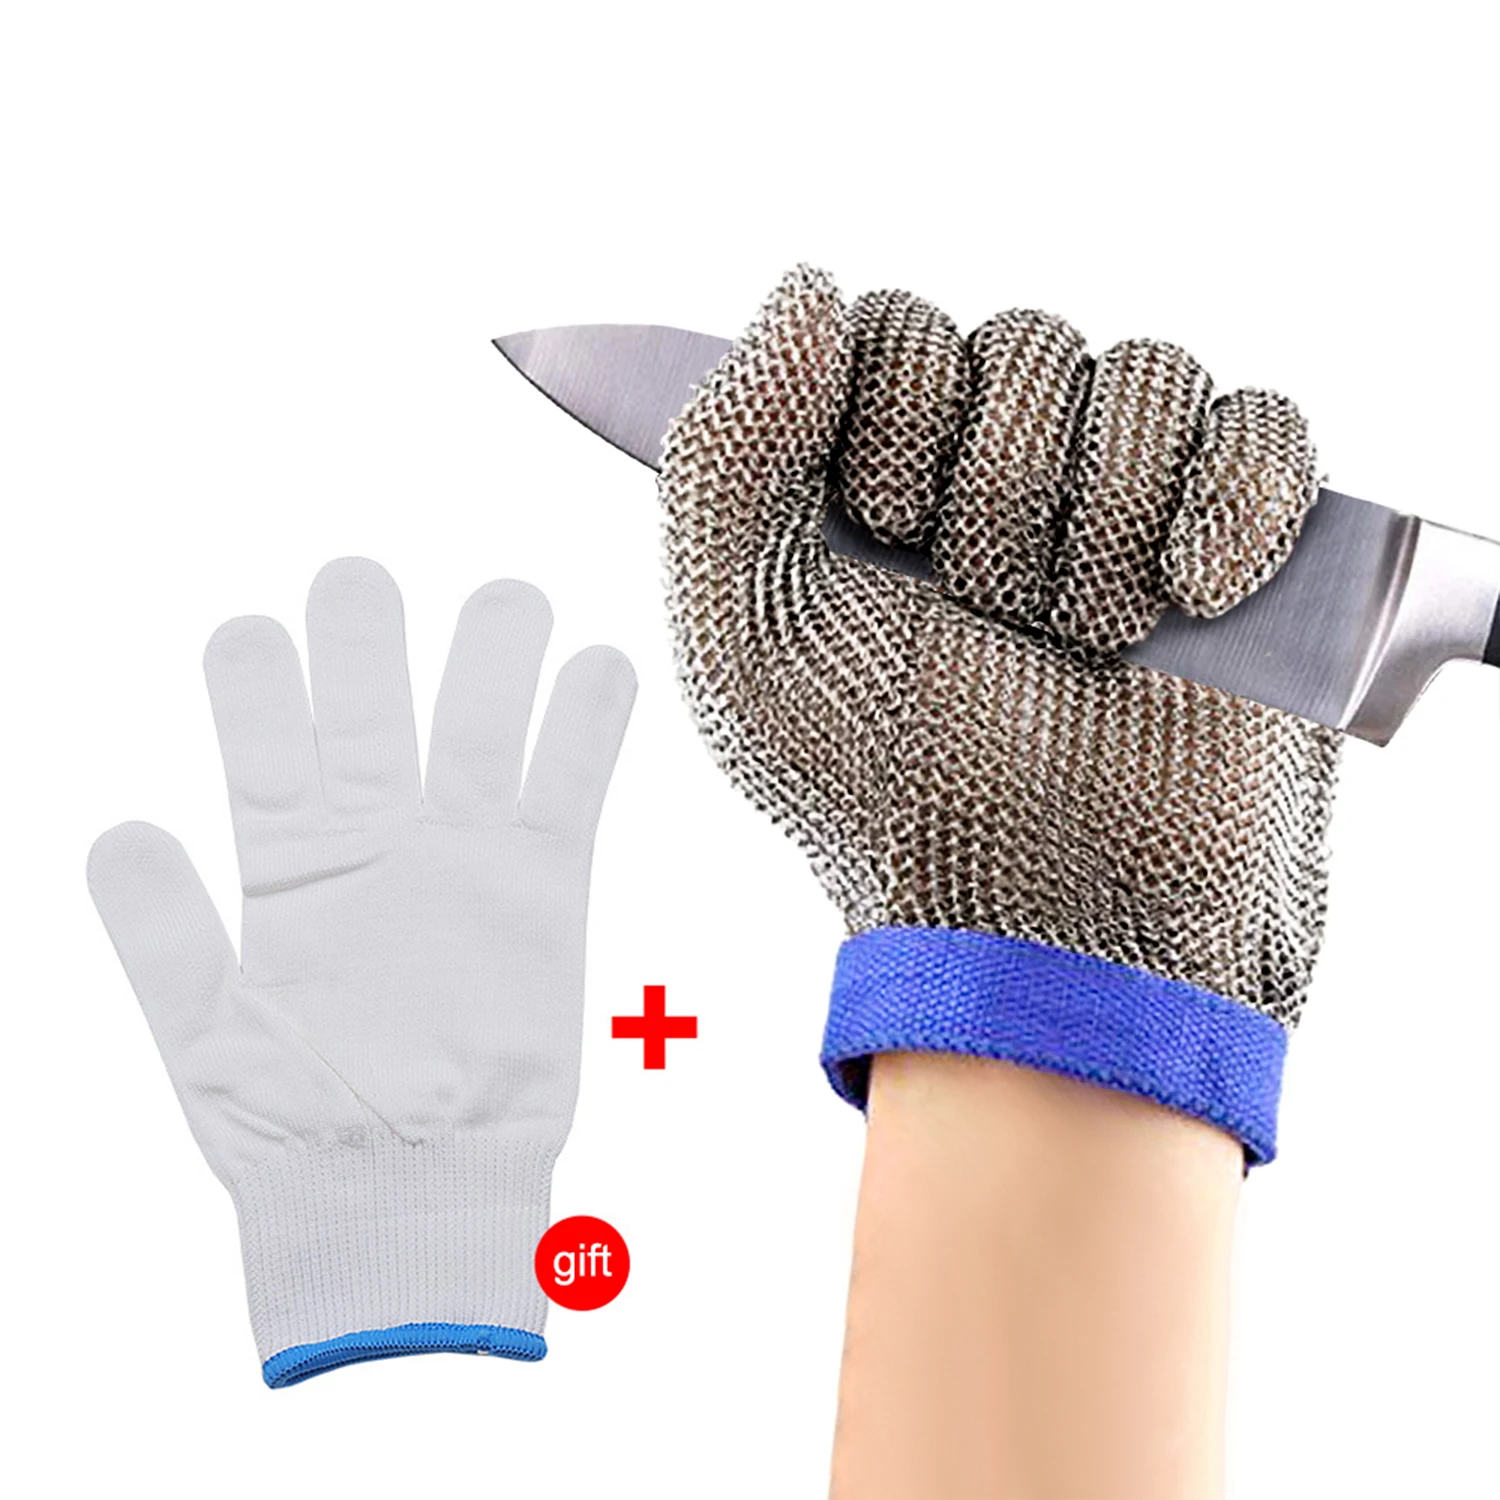 Kitcheniva Cut Resistant Safety Stainless Steel Work Gloves